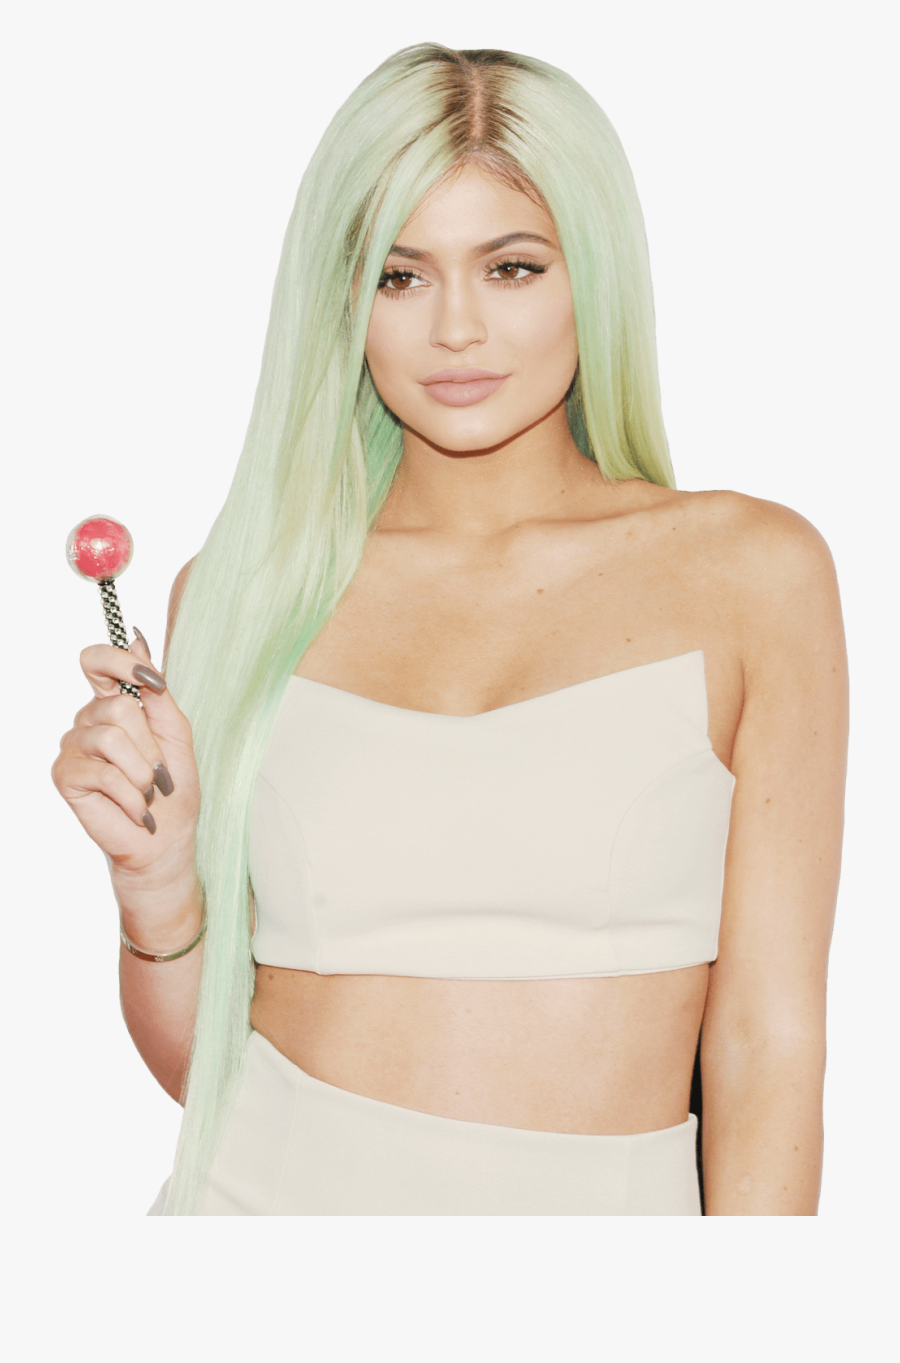 Kylie Jenner Lollipop - Kylie Jenner Png, Transparent Clipart